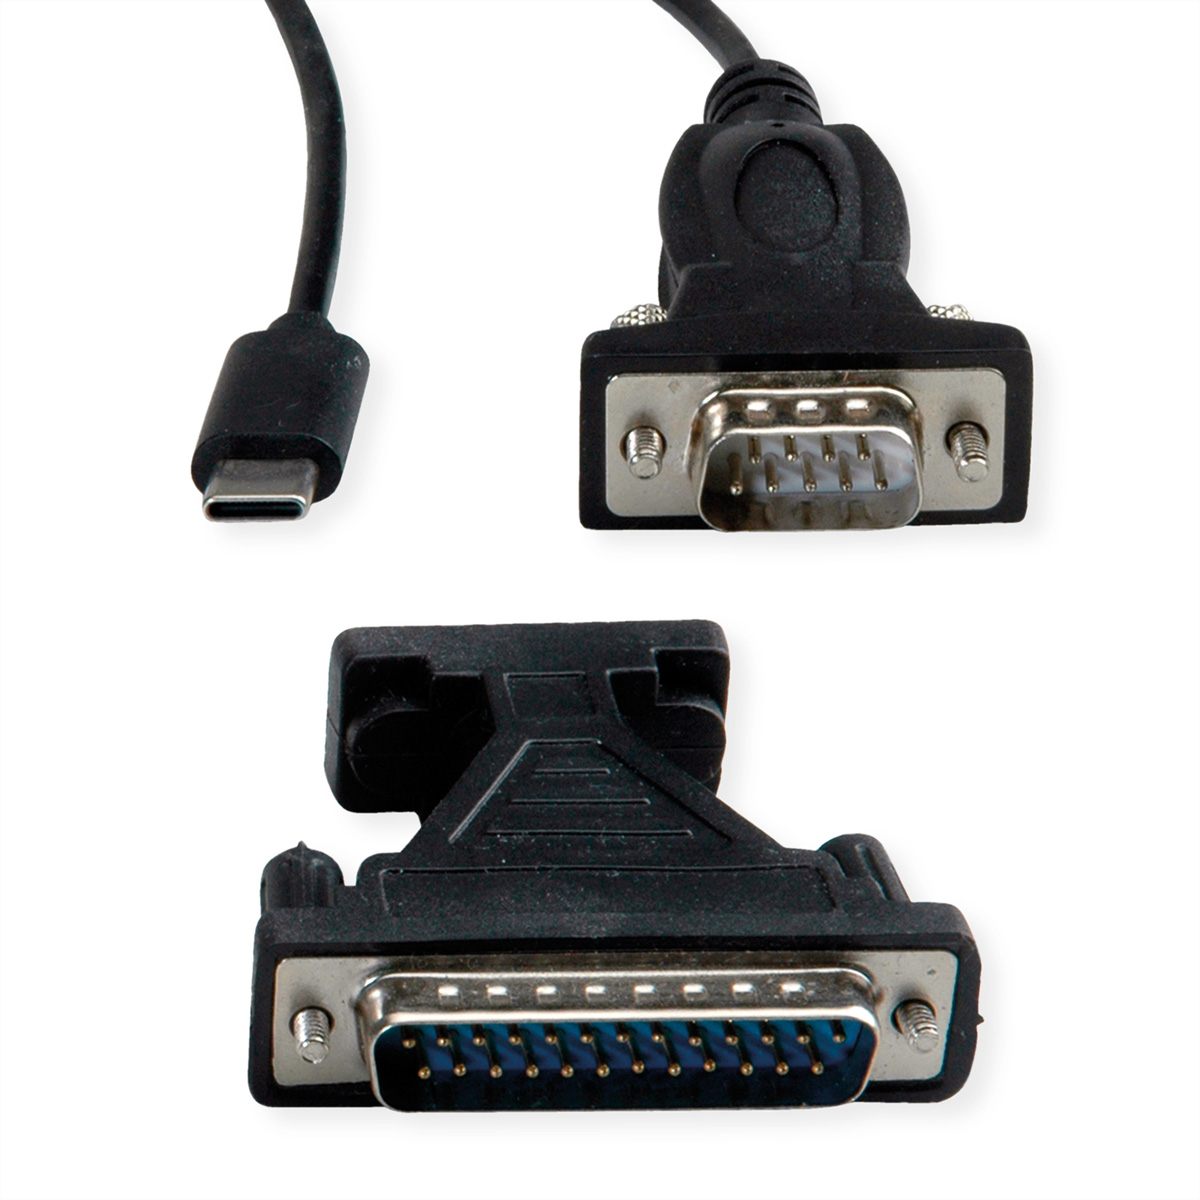 VALUE USB - Seriell USB-Seriell RS232 Konverter-Kabel, C - Konverter Typ